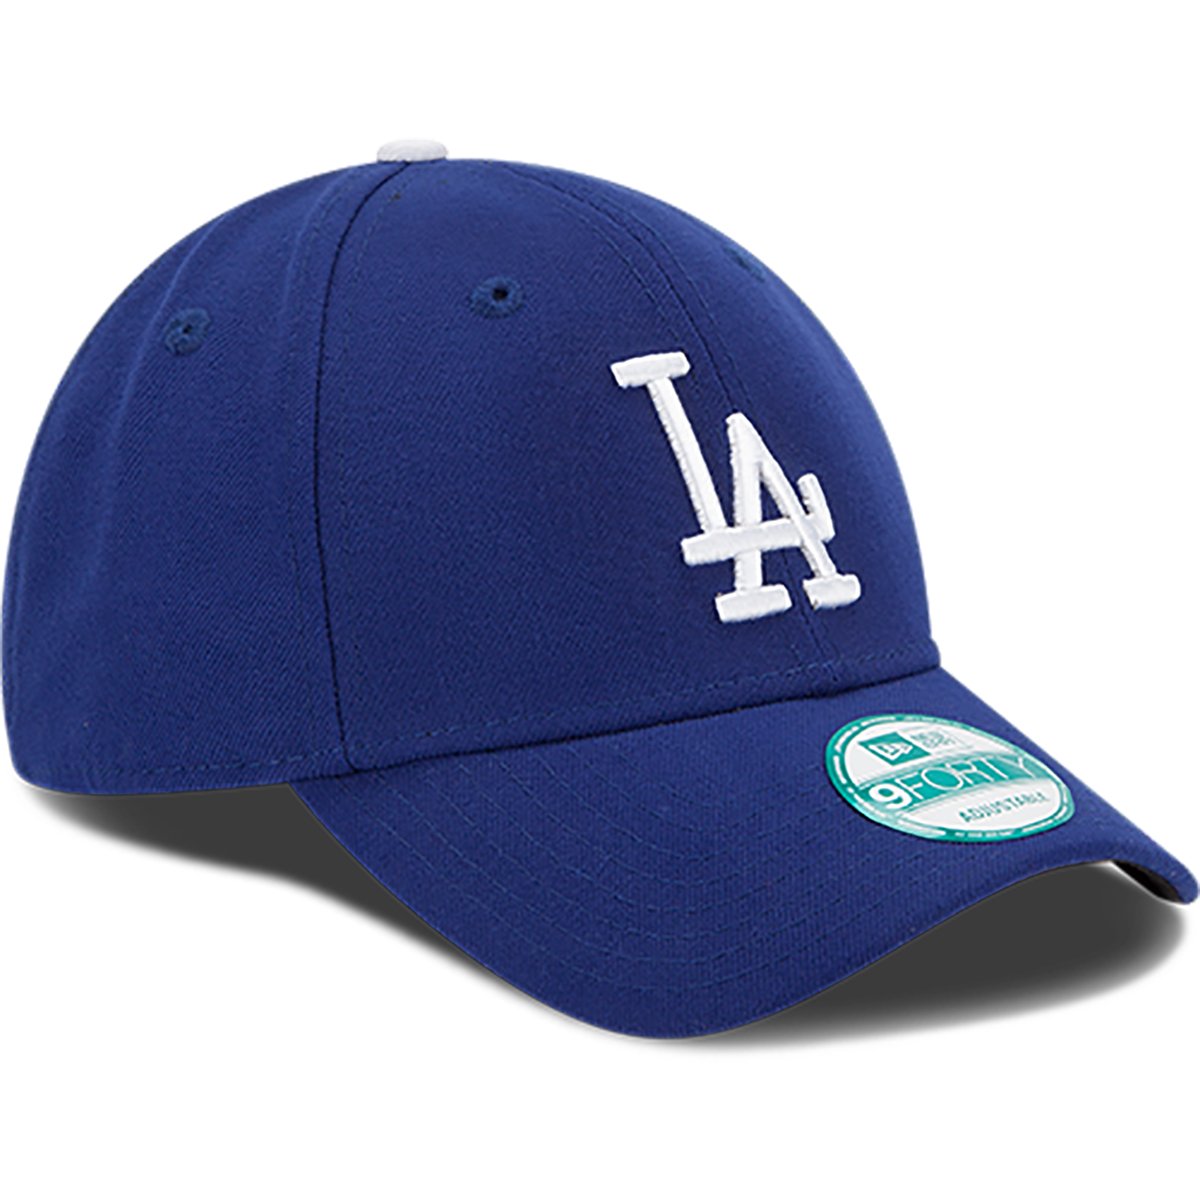 Gorras Los Angeles Dodgers oficiales de béisbol, Dodgers gorras